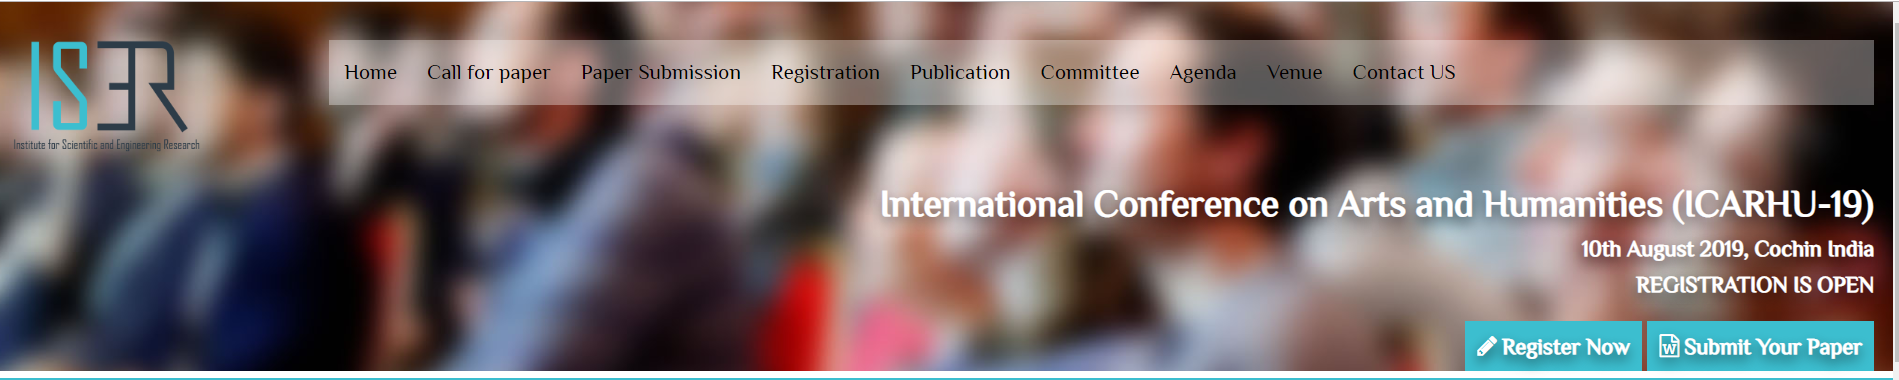 International Conference on Arts and Humanities (ICARHU-19), Cochin, Kerala, India